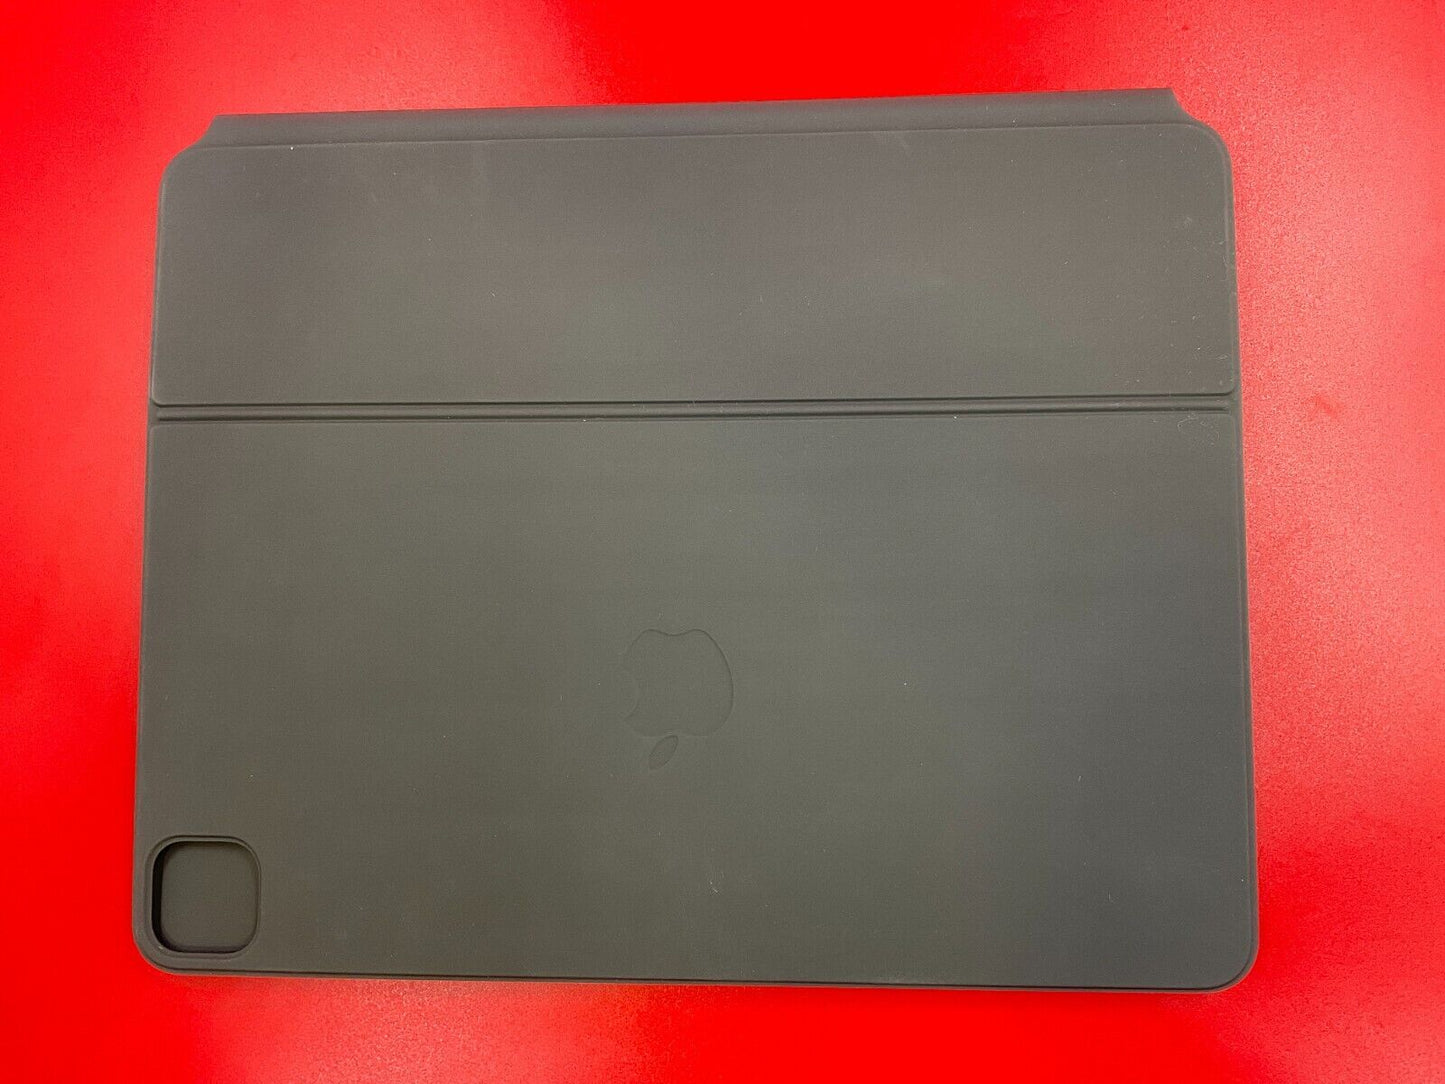 Magic Keyboard for iPad Pro 12.9‑inch (6th generation) - Black